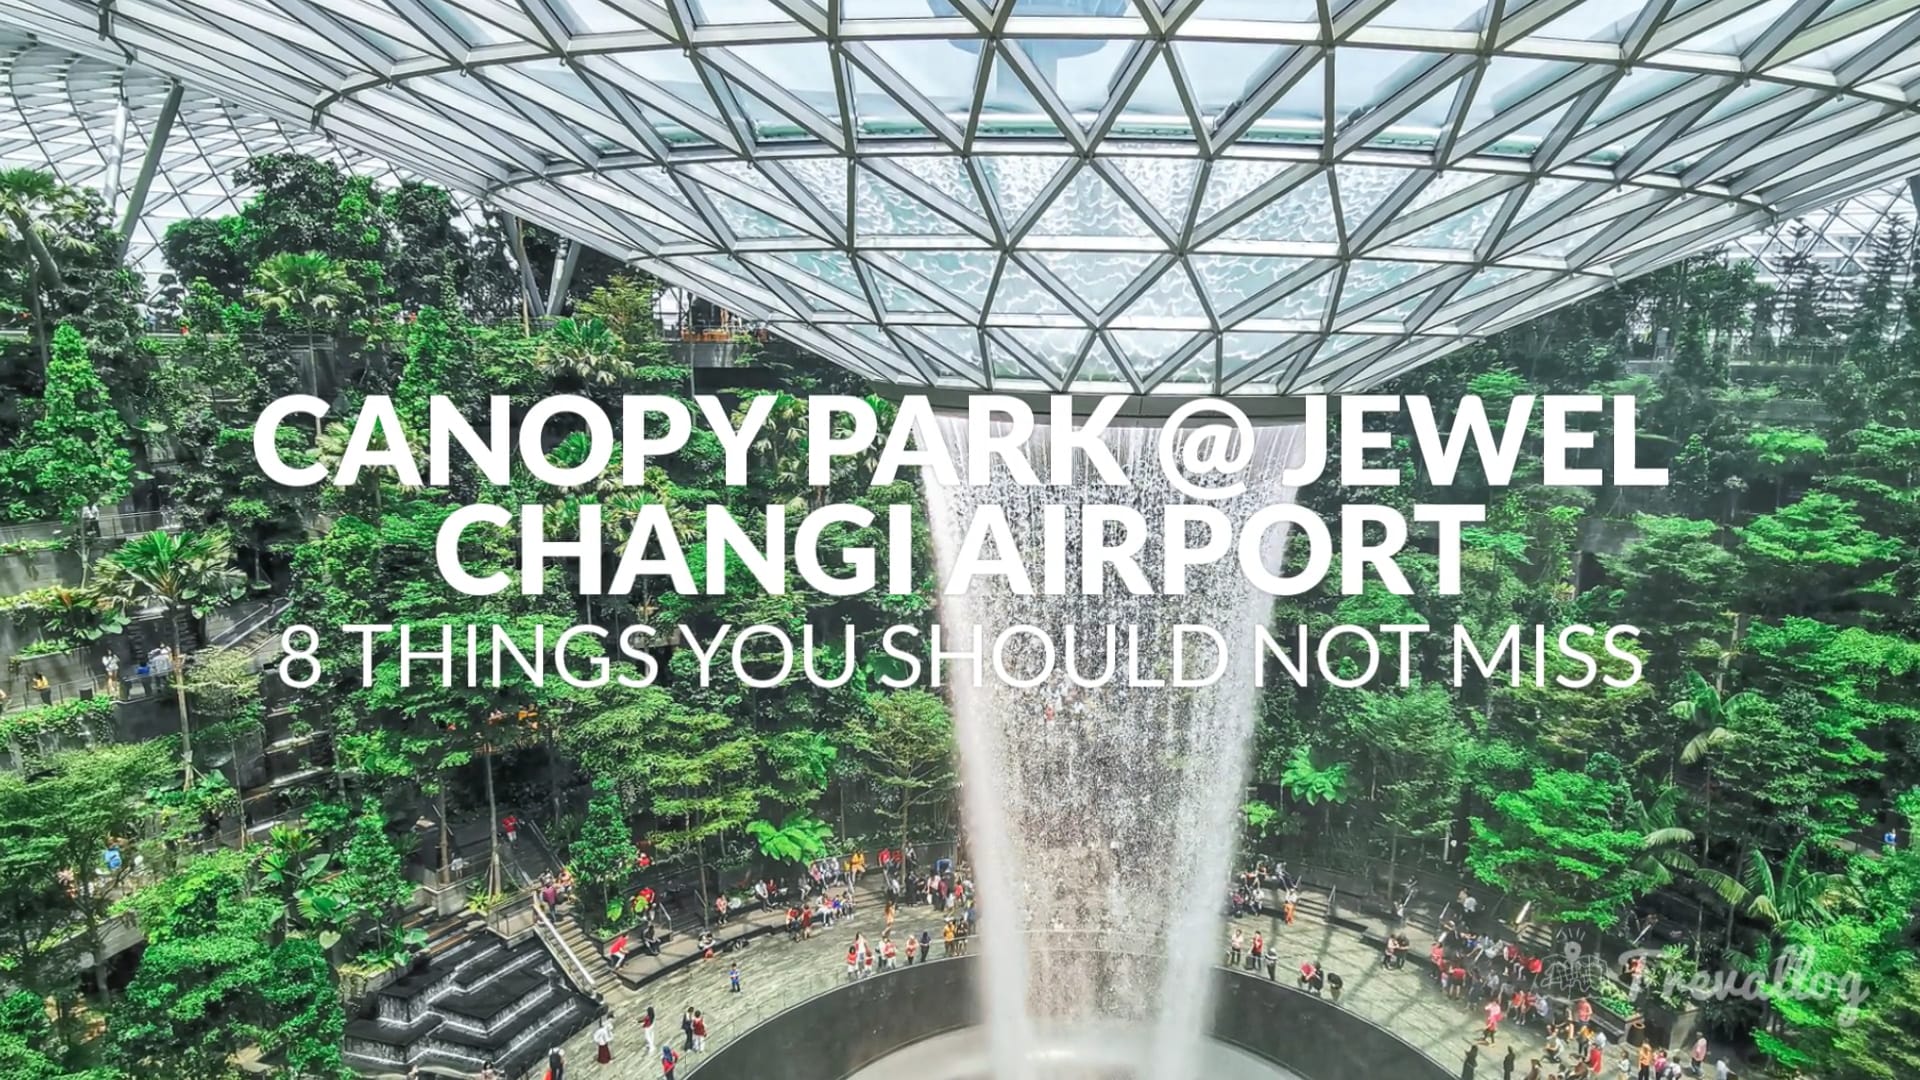 Jewel Changi Airport Singapore Ultimate Guide 2023